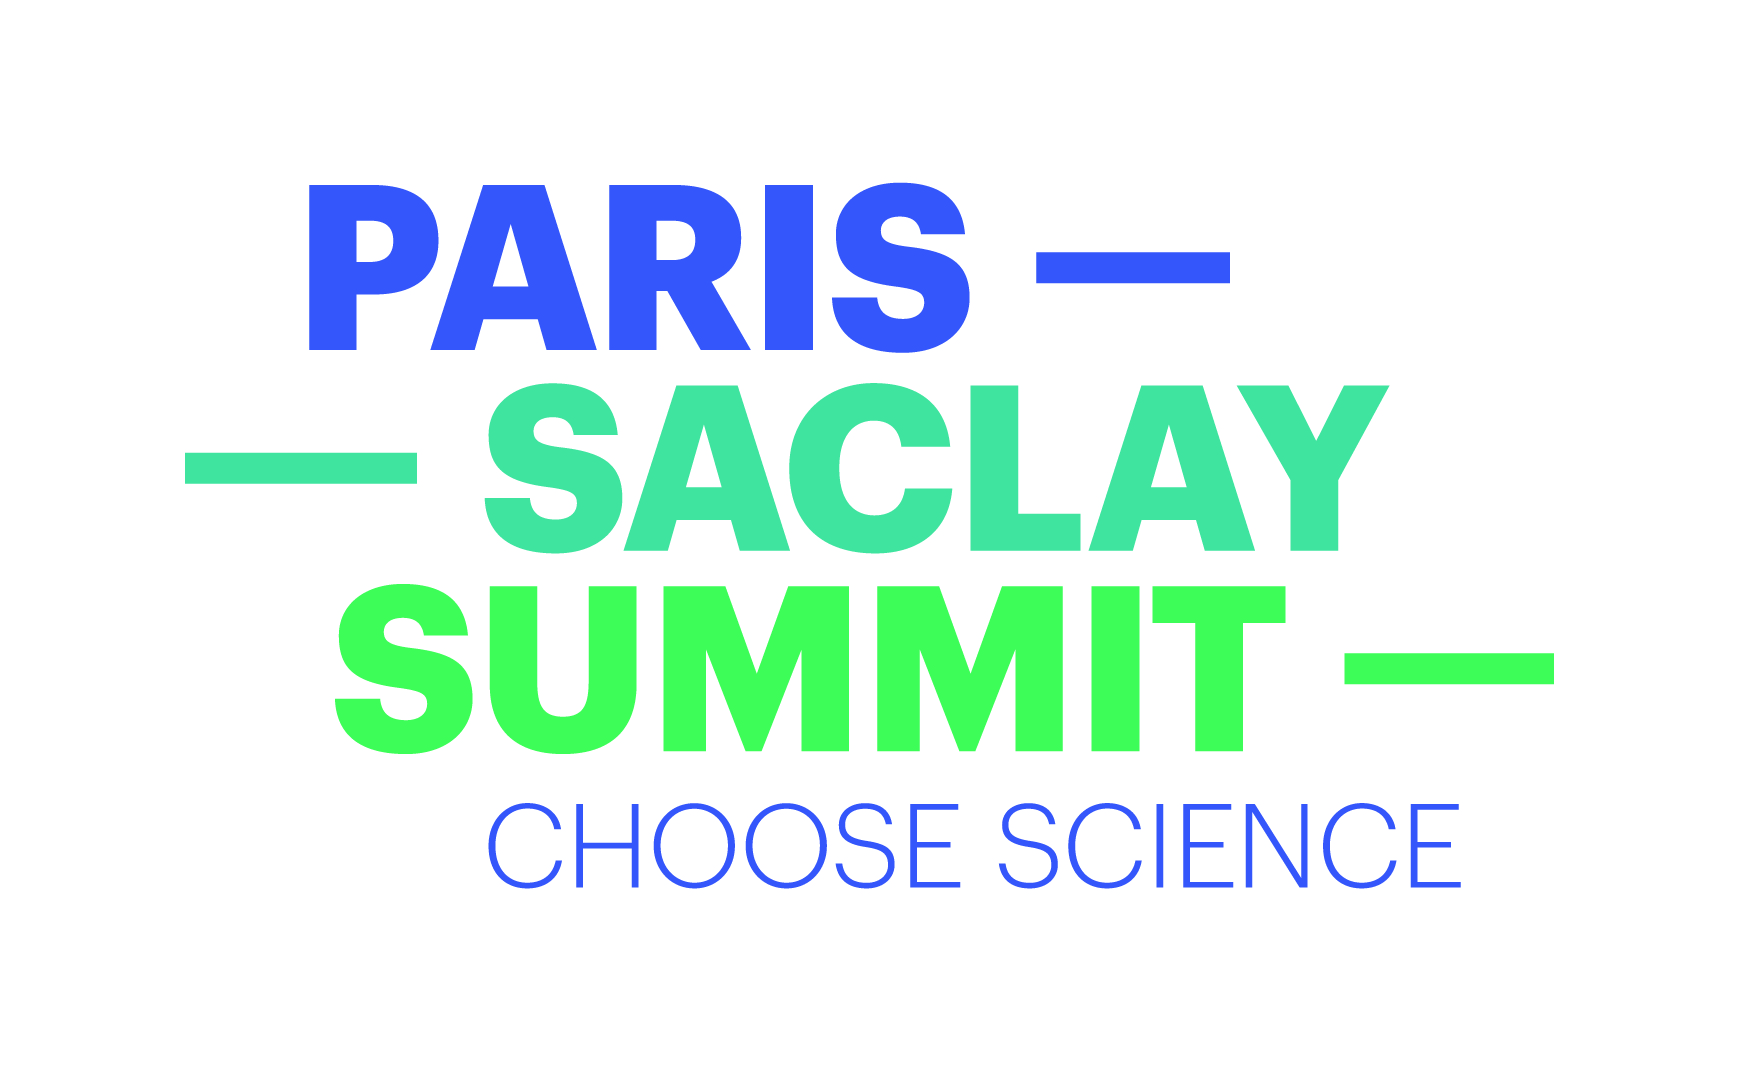 Paris Saclay Summit Choose Science